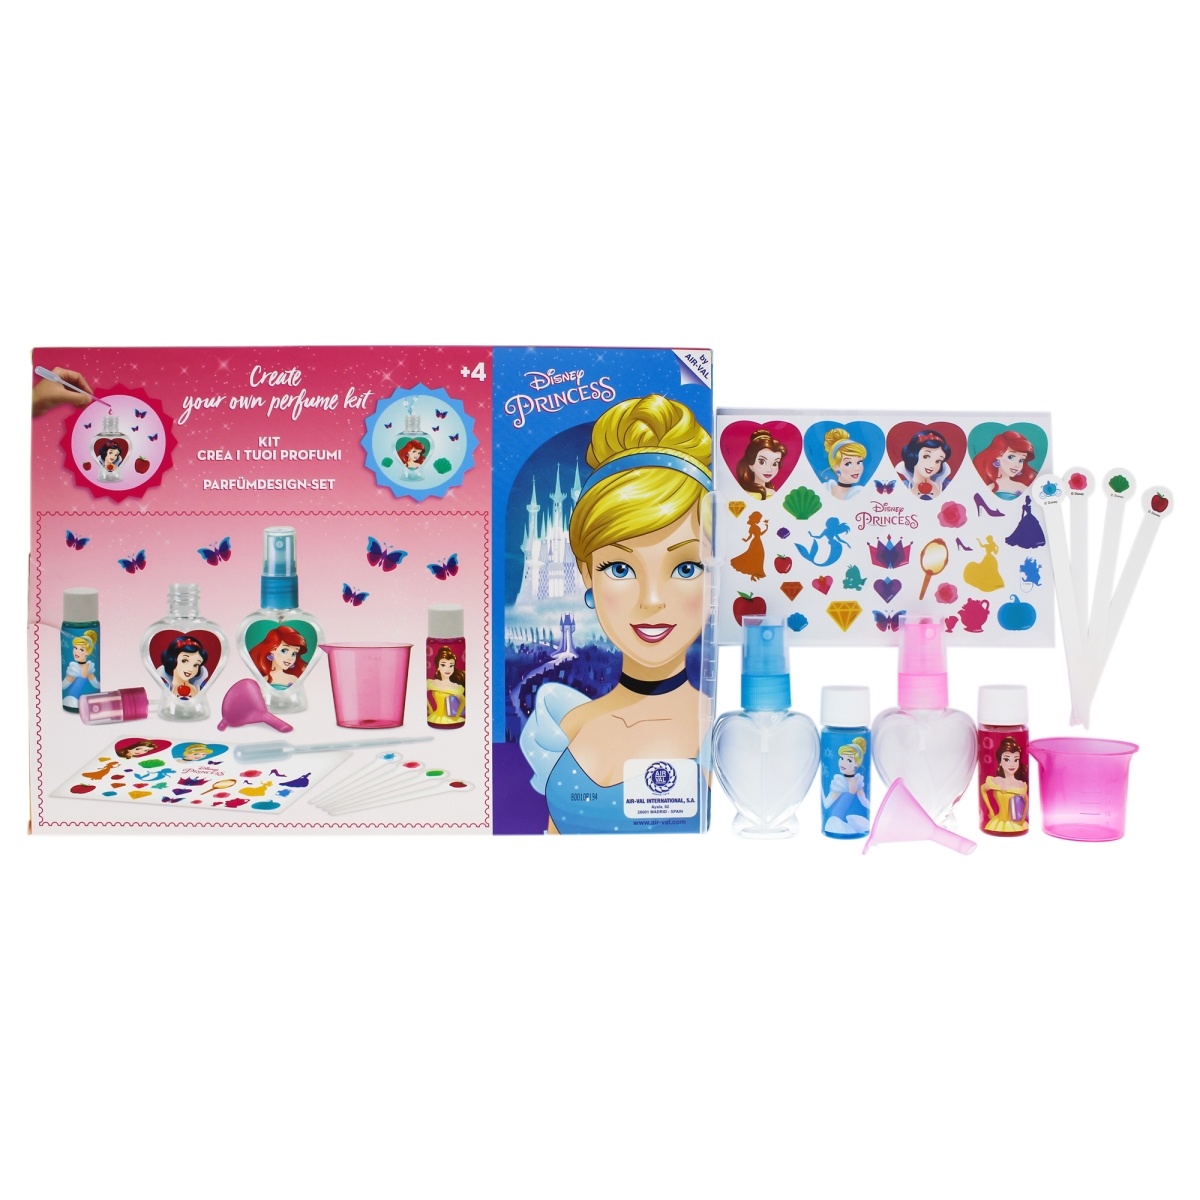 I0089364 8 Piece Princess Create Your Perfume Gift Set For Kids